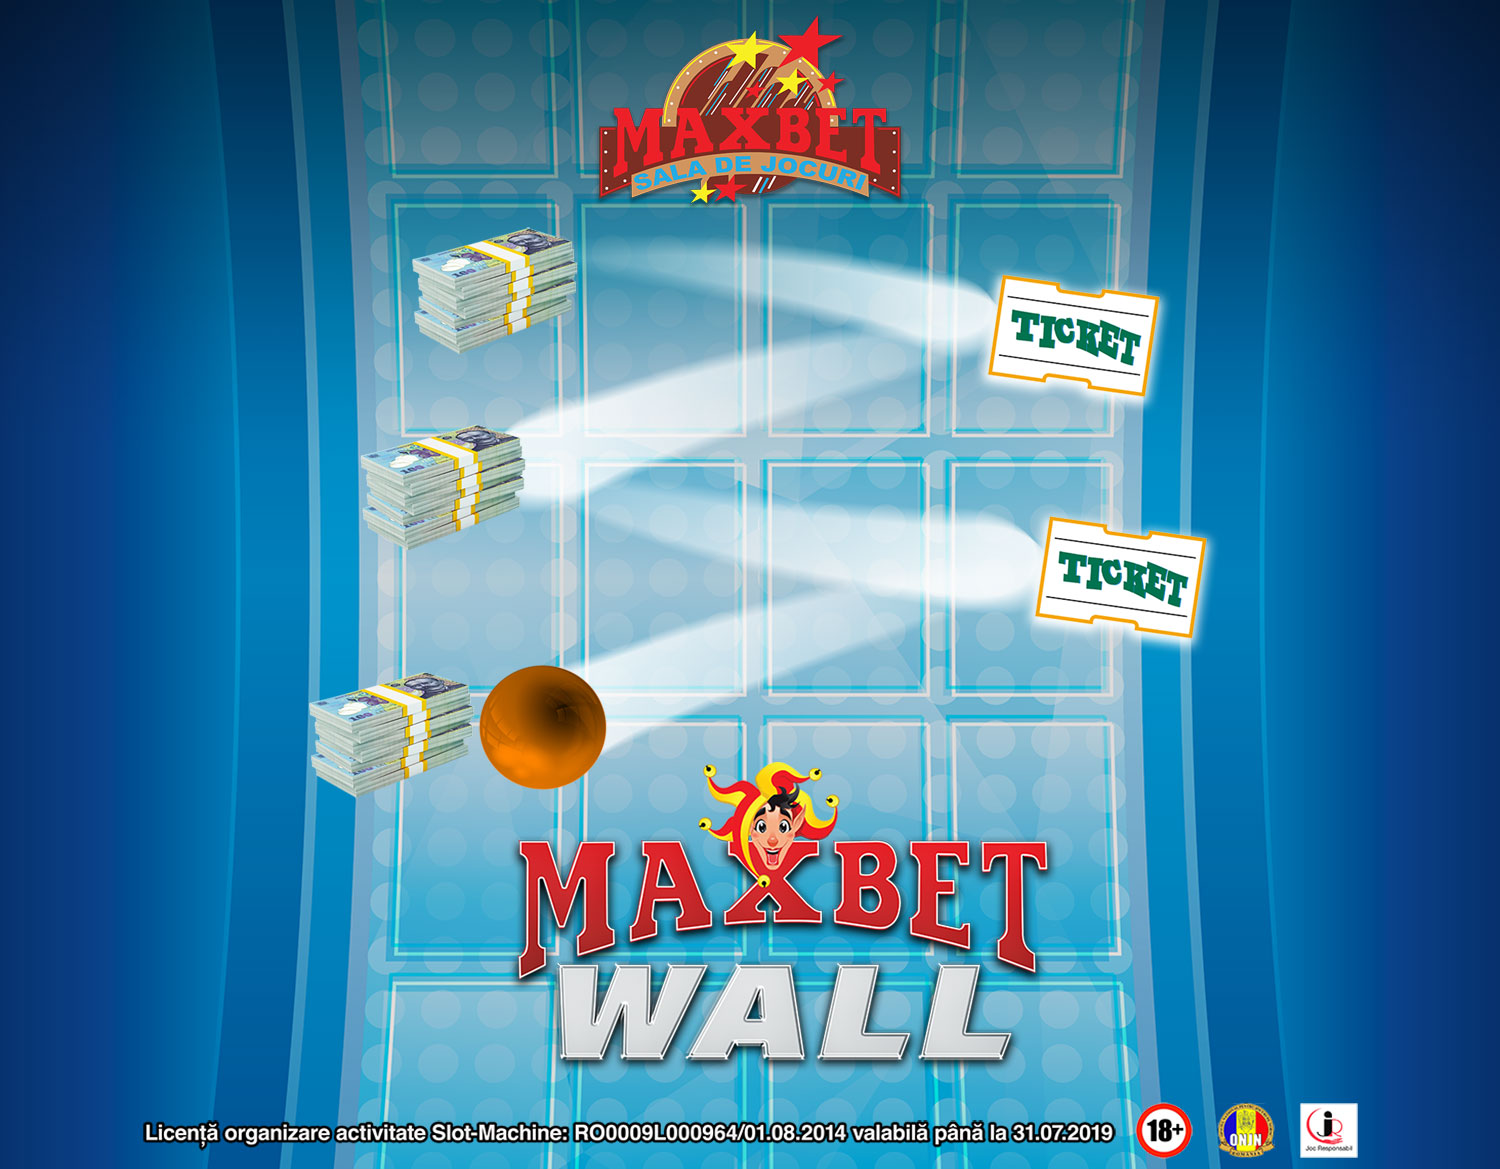 “MaxBet Wall”